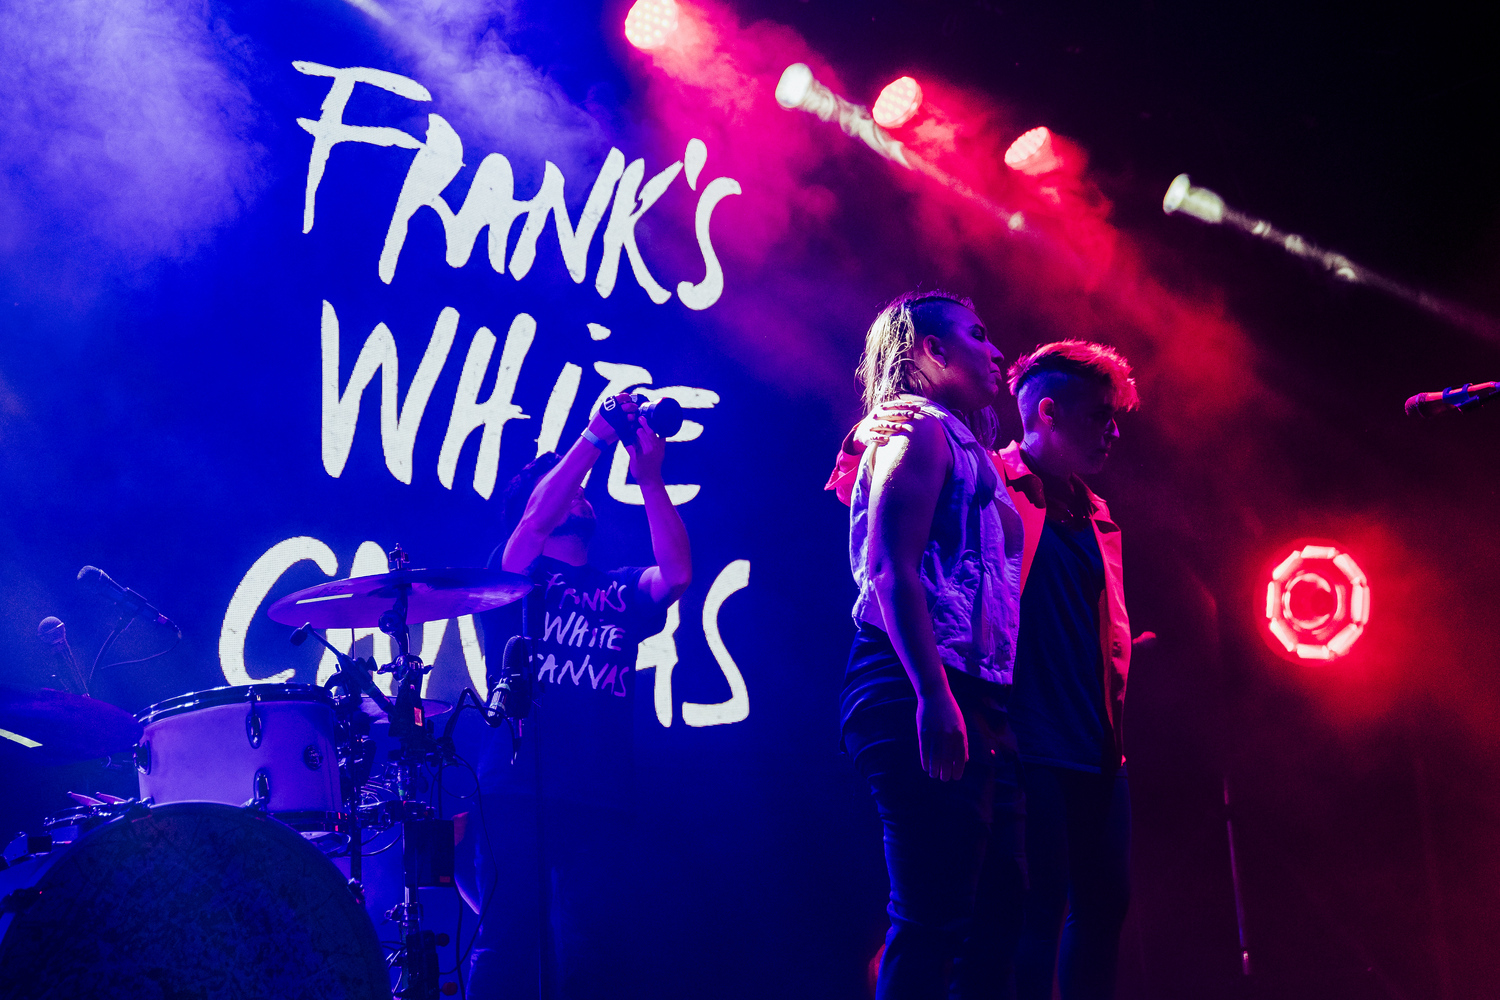 Frank's White Canvas - Adiós "My Life, My Canvas"